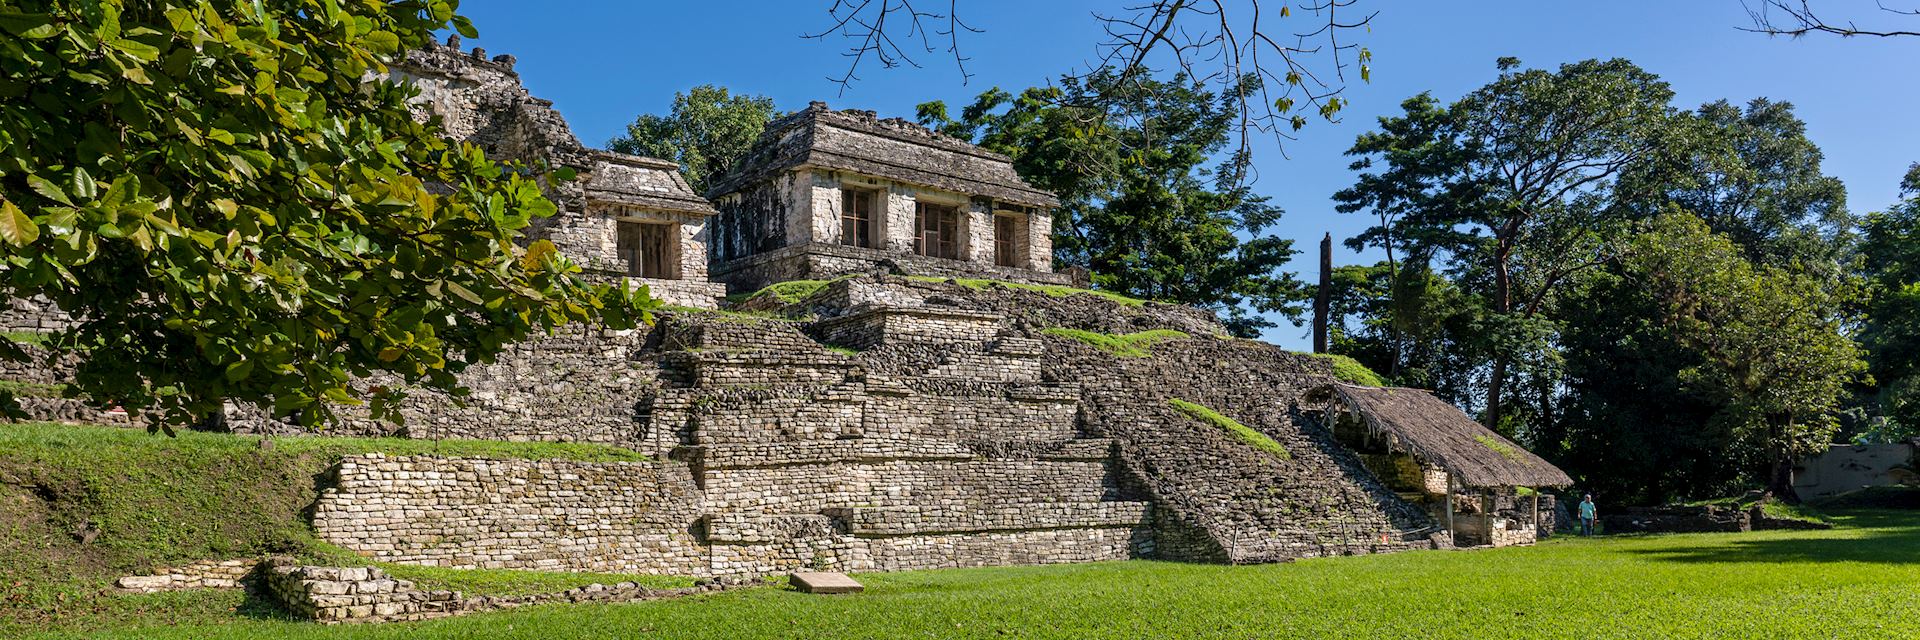 Mayan city ruins, Palenque, Mexico